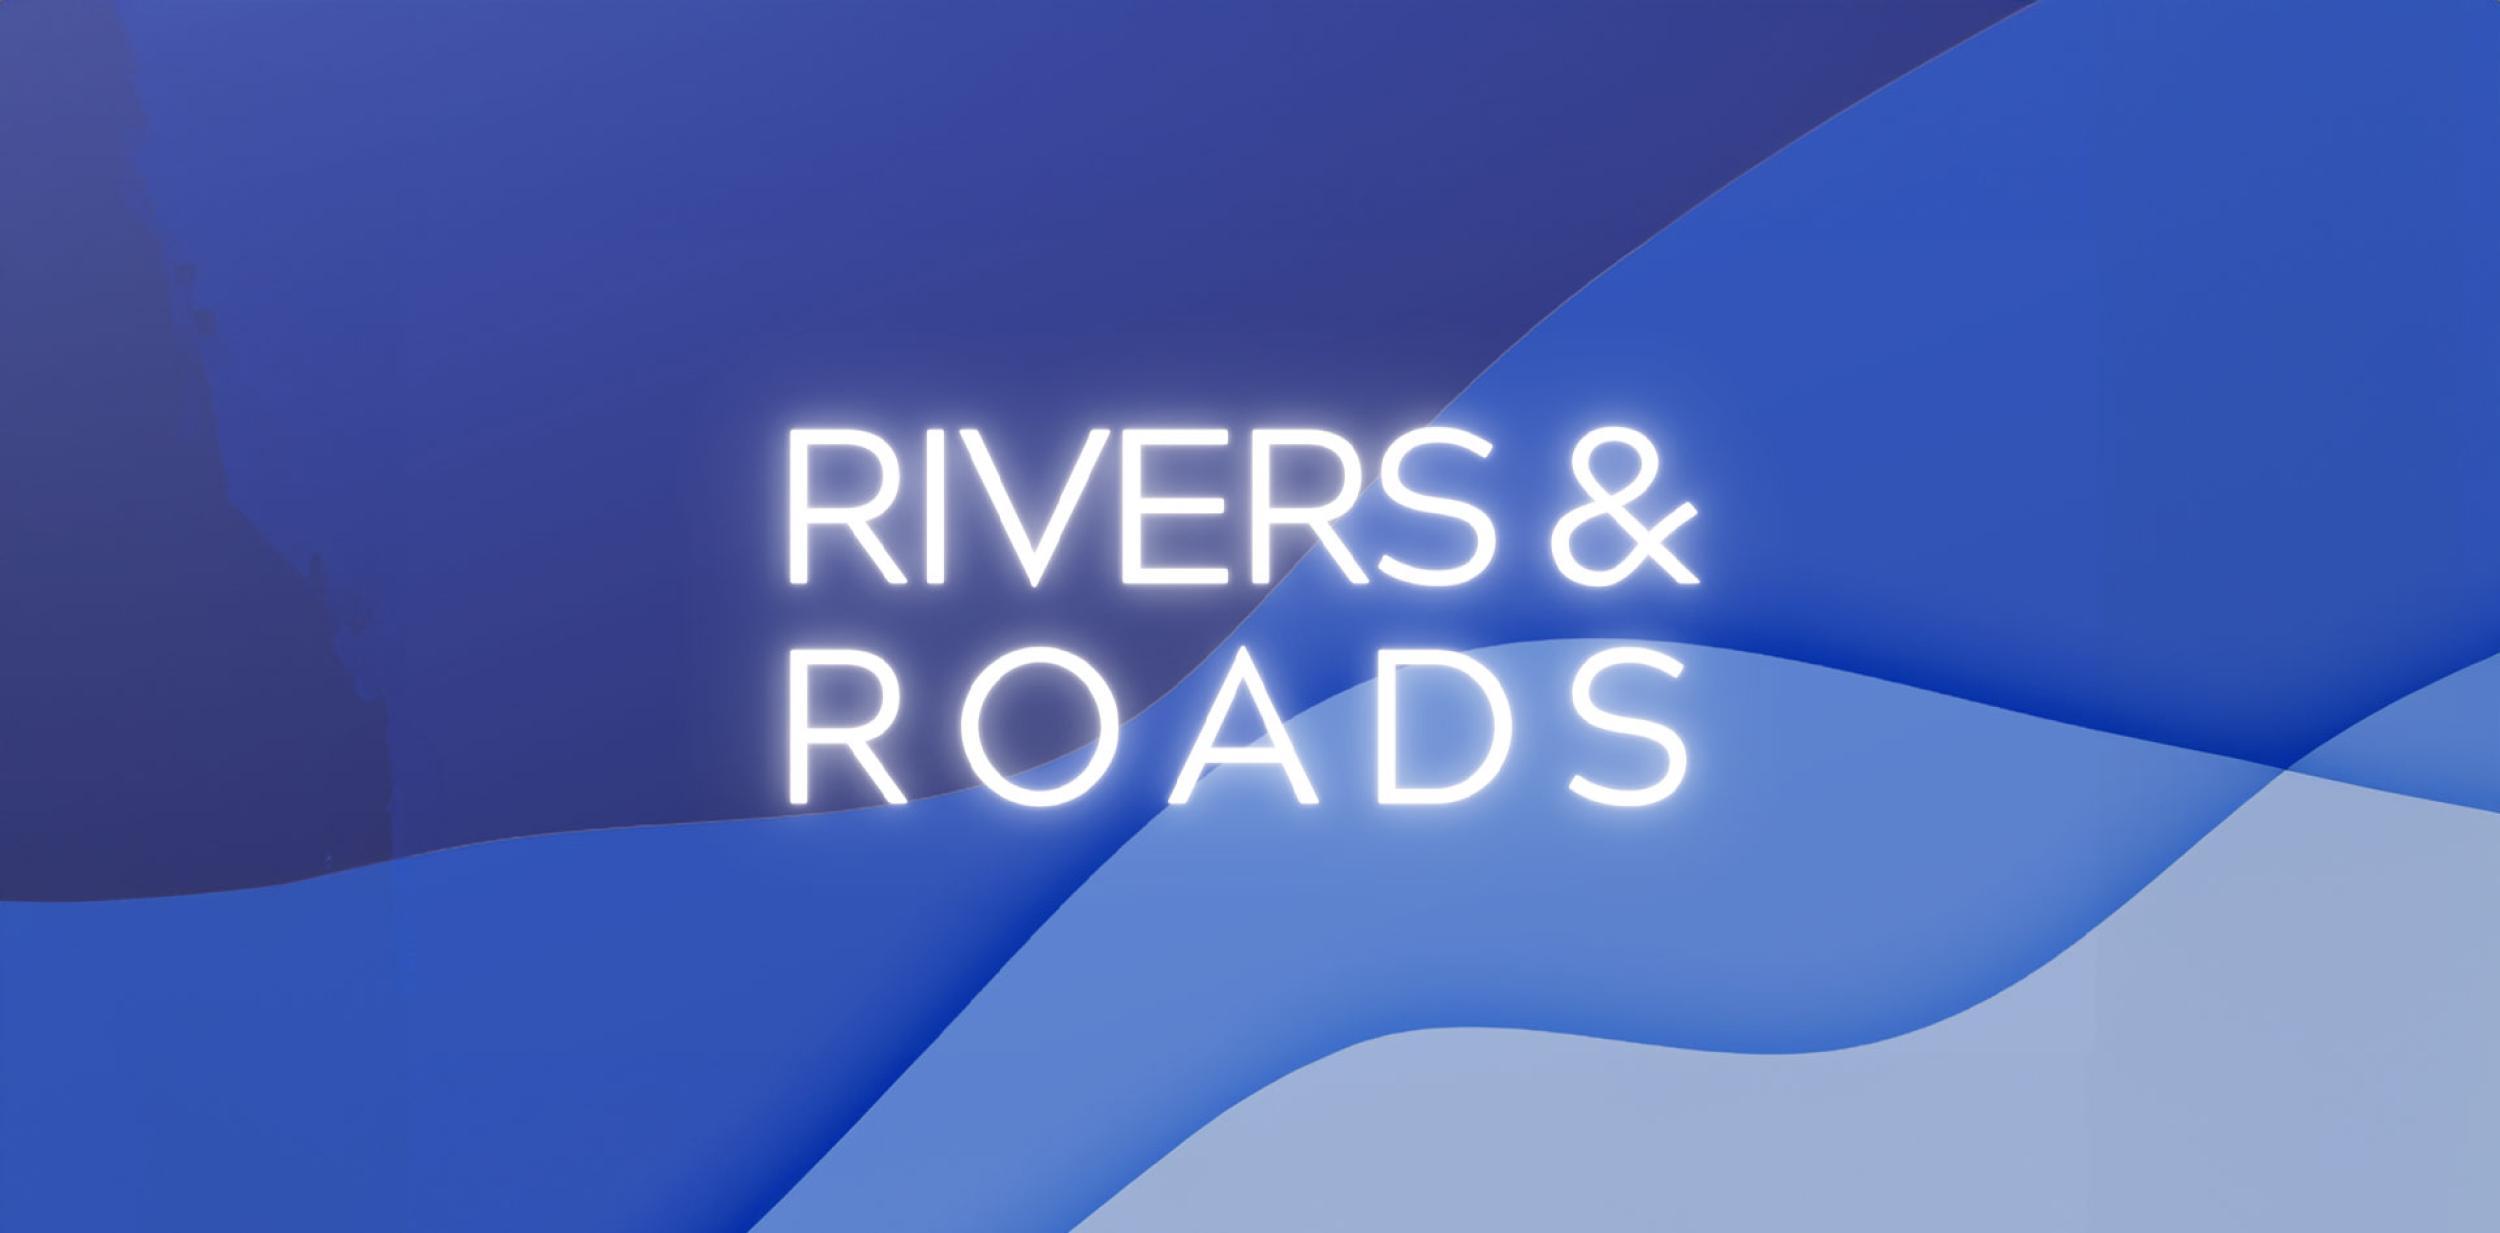 Text: Rivers & Roads